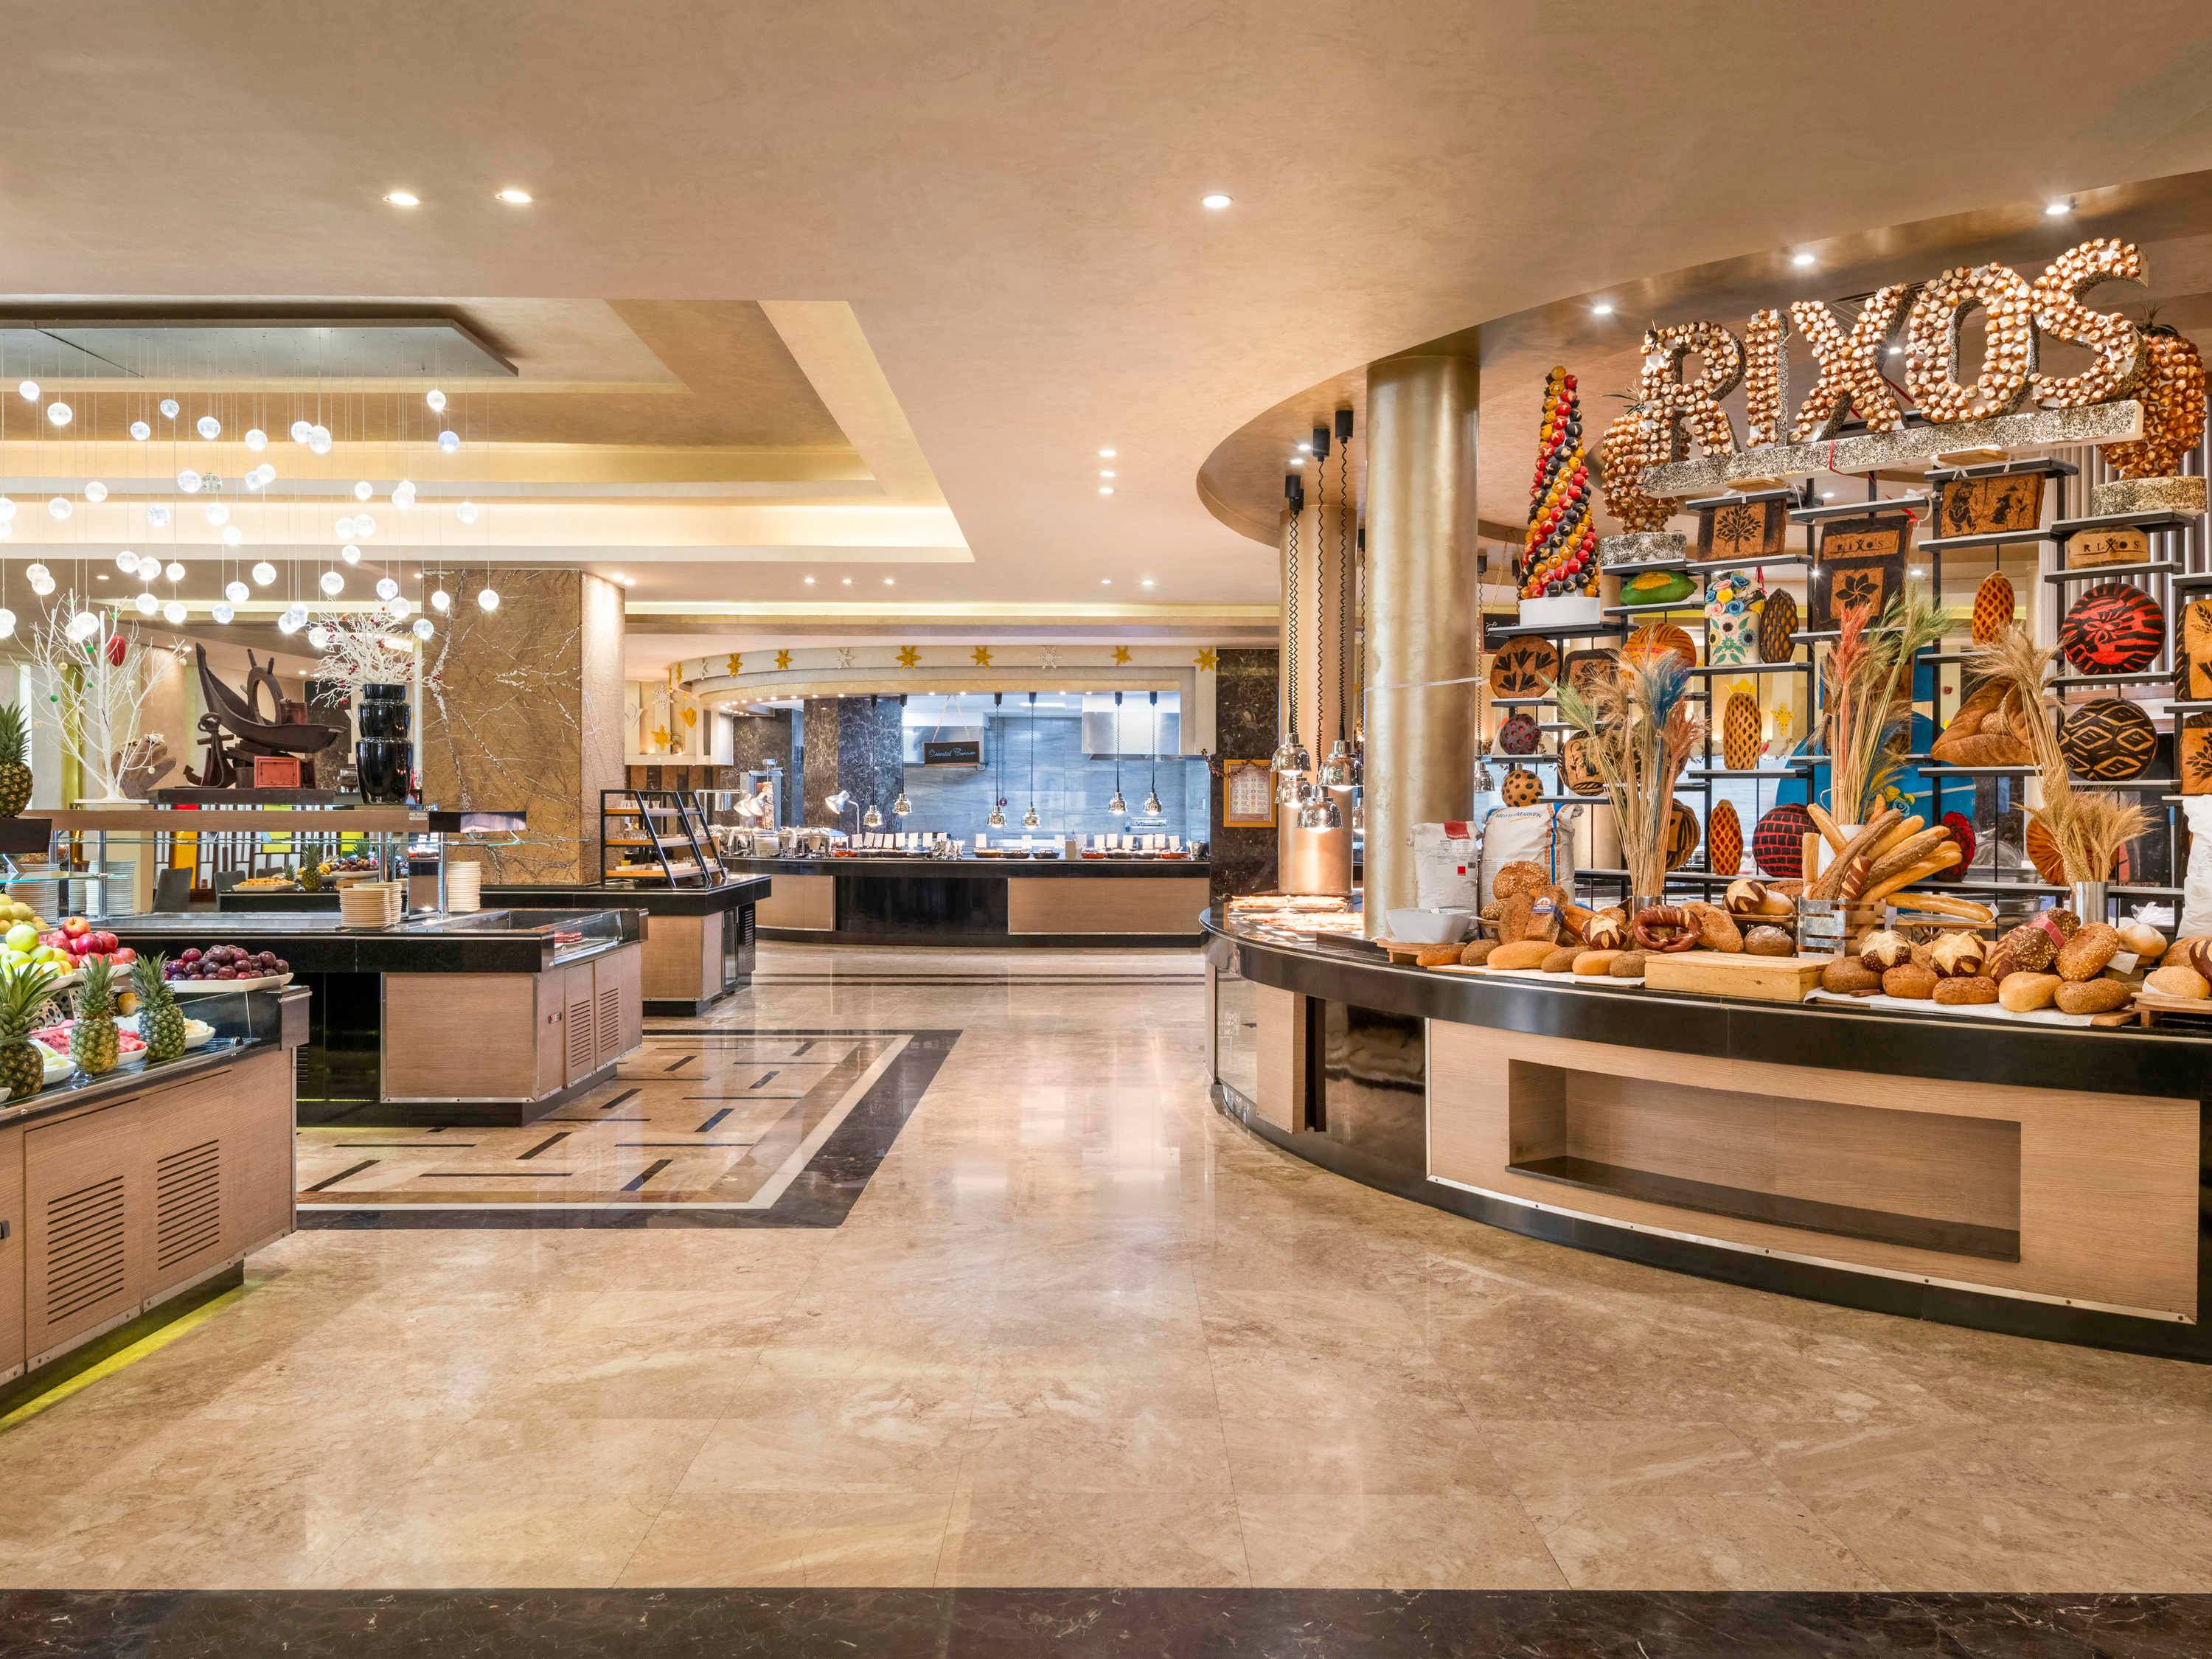 Rixos Premium Seagate - All-inclusive Resort in Sharm El Sheikh | Rixos